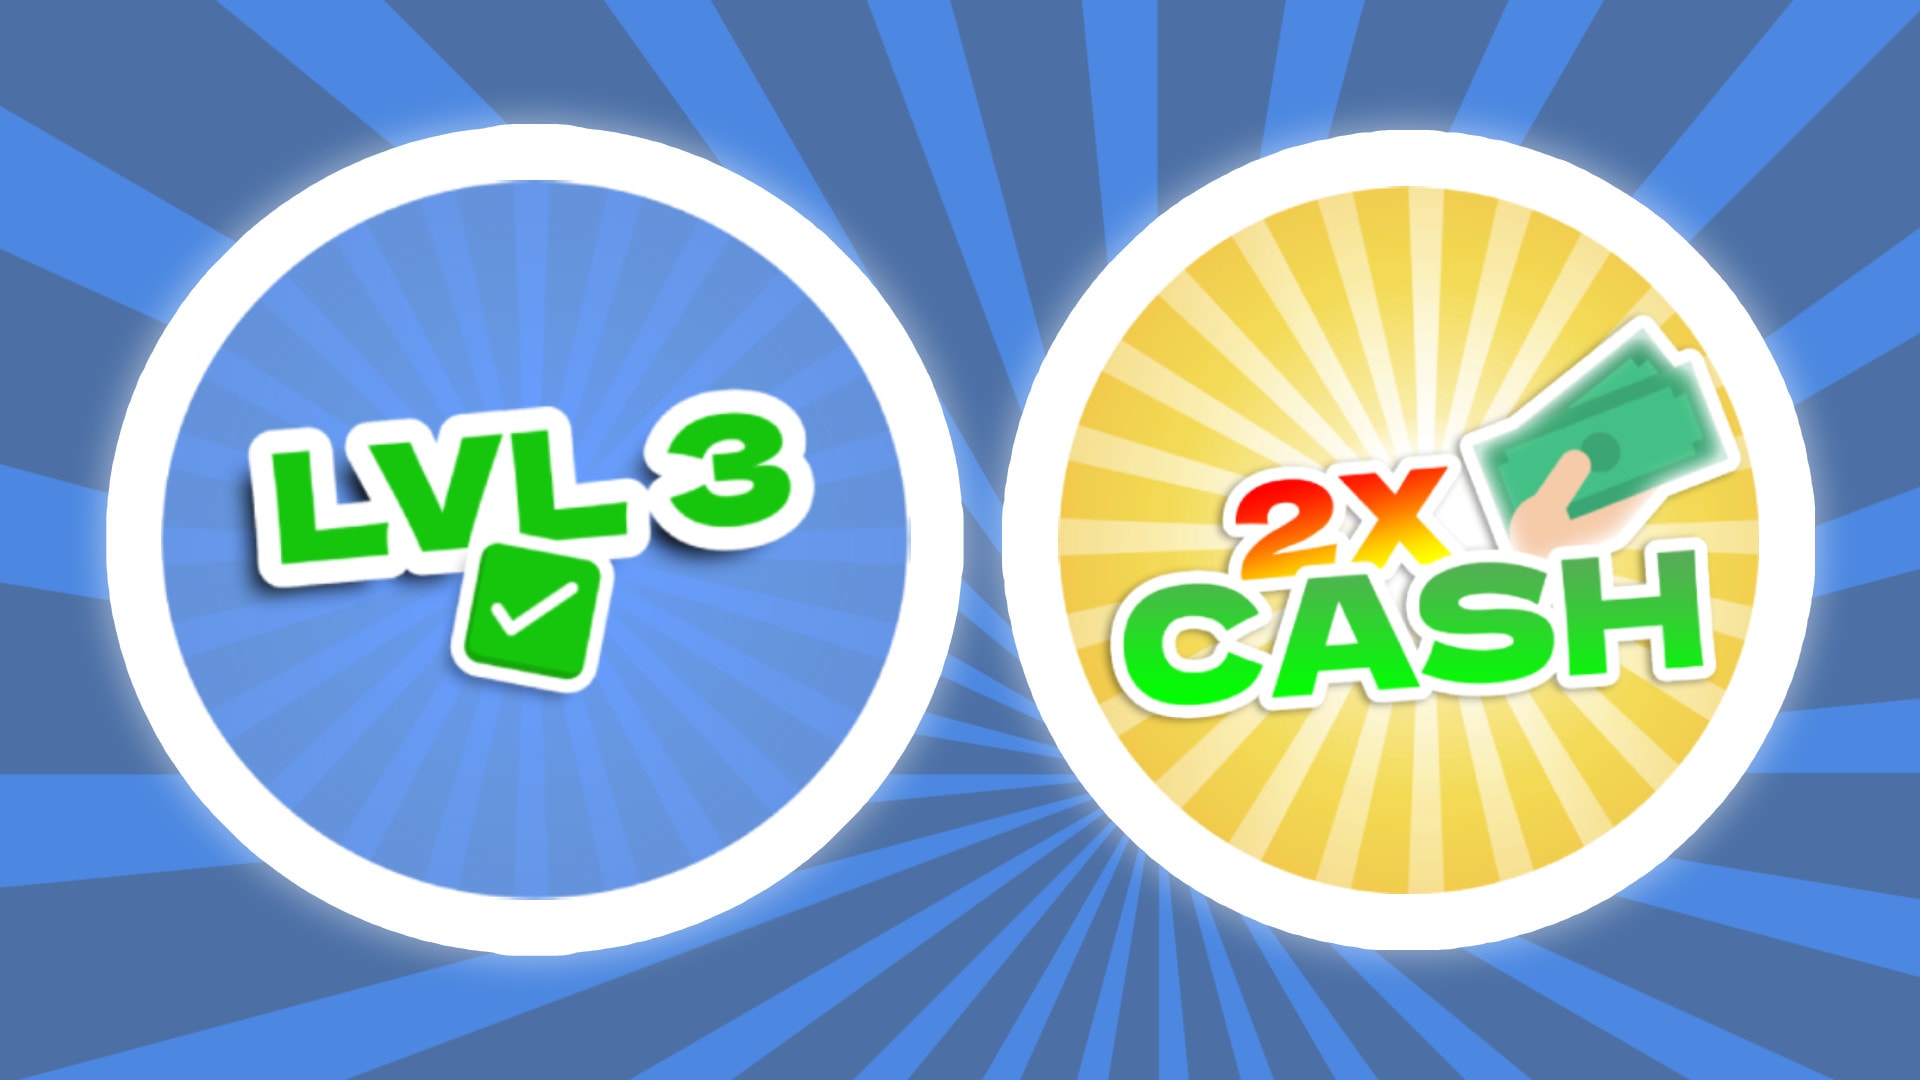 2x Cash Gamepass - Roblox